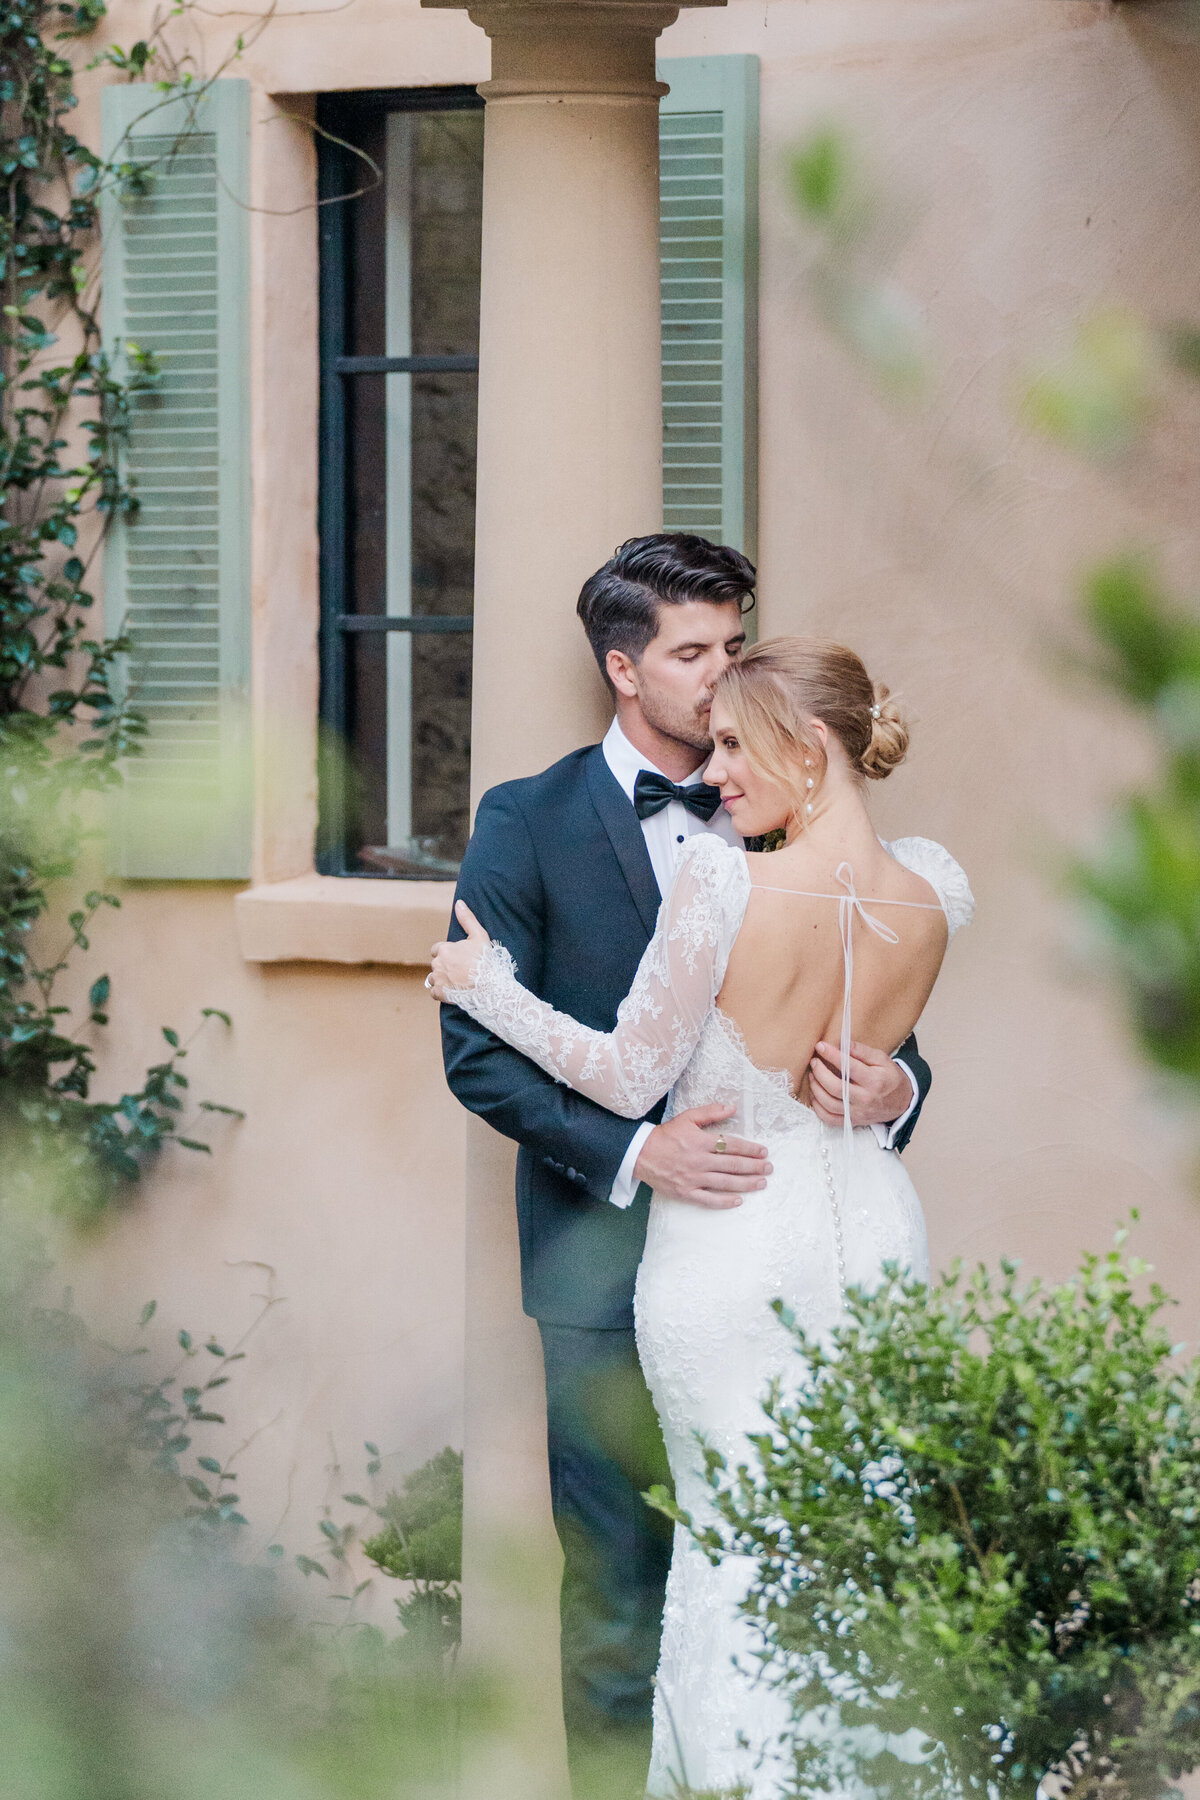 Romantic Italy-themed wedding